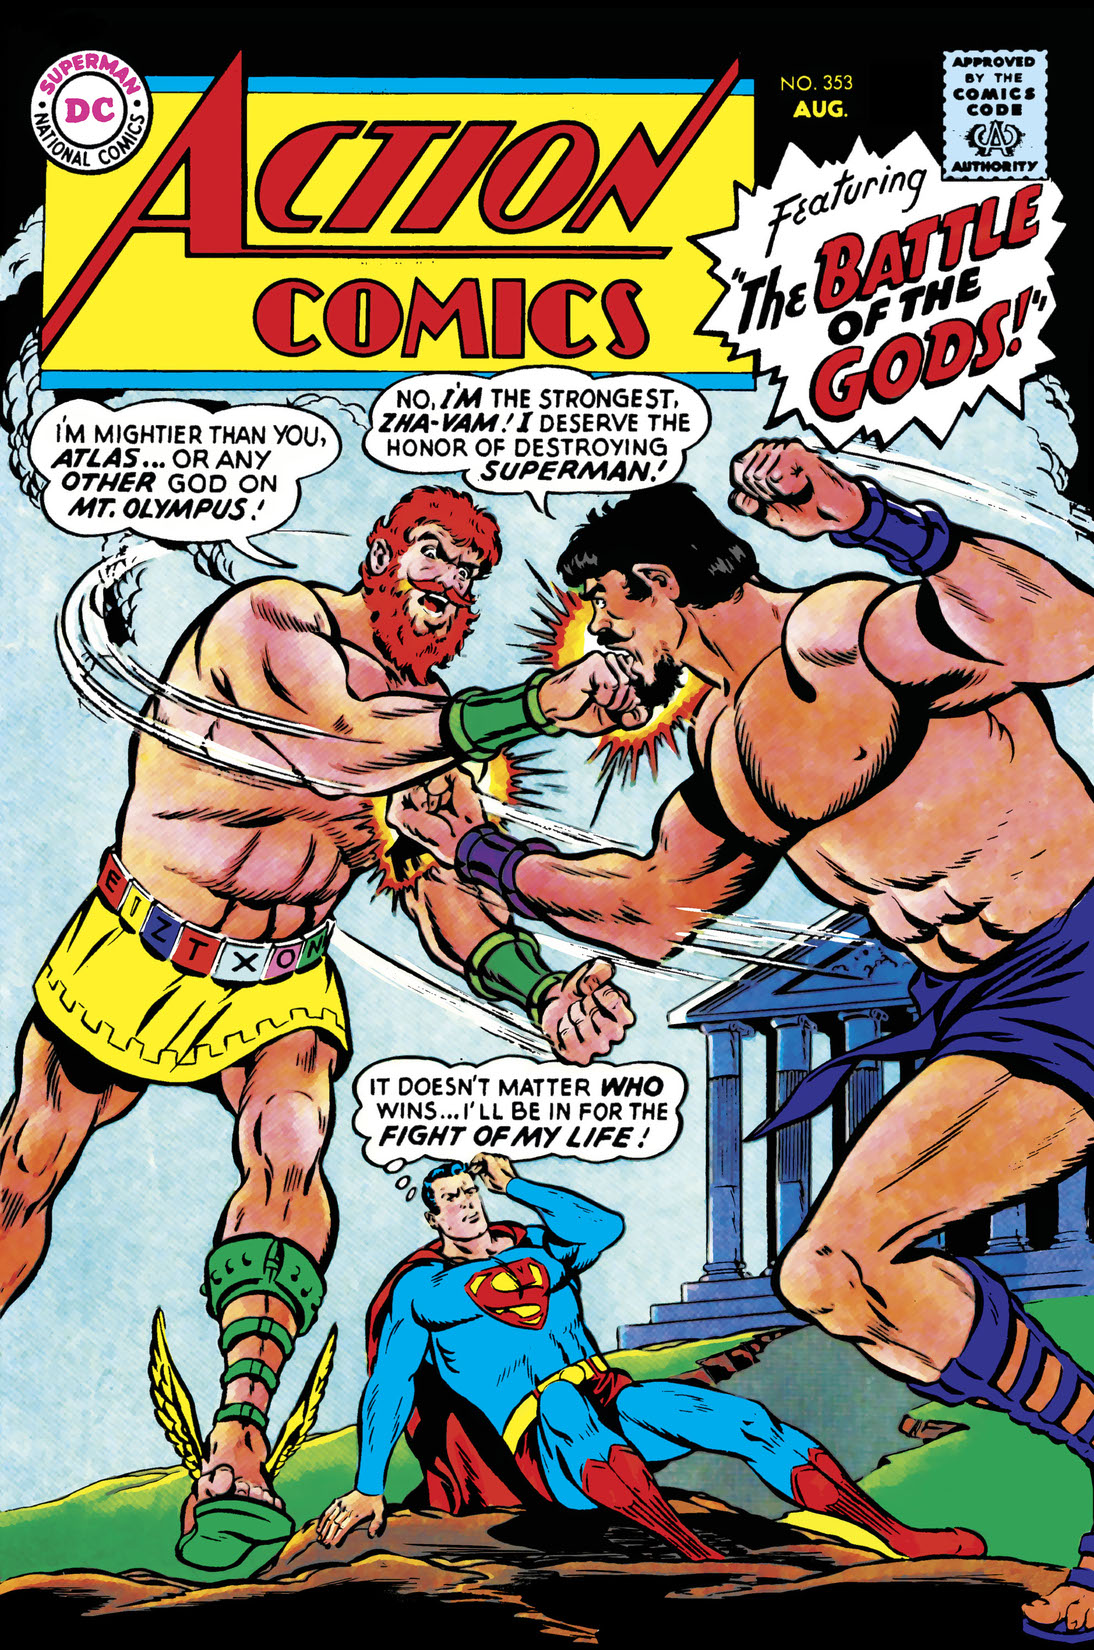 Action Comics (1938-) #353 preview images